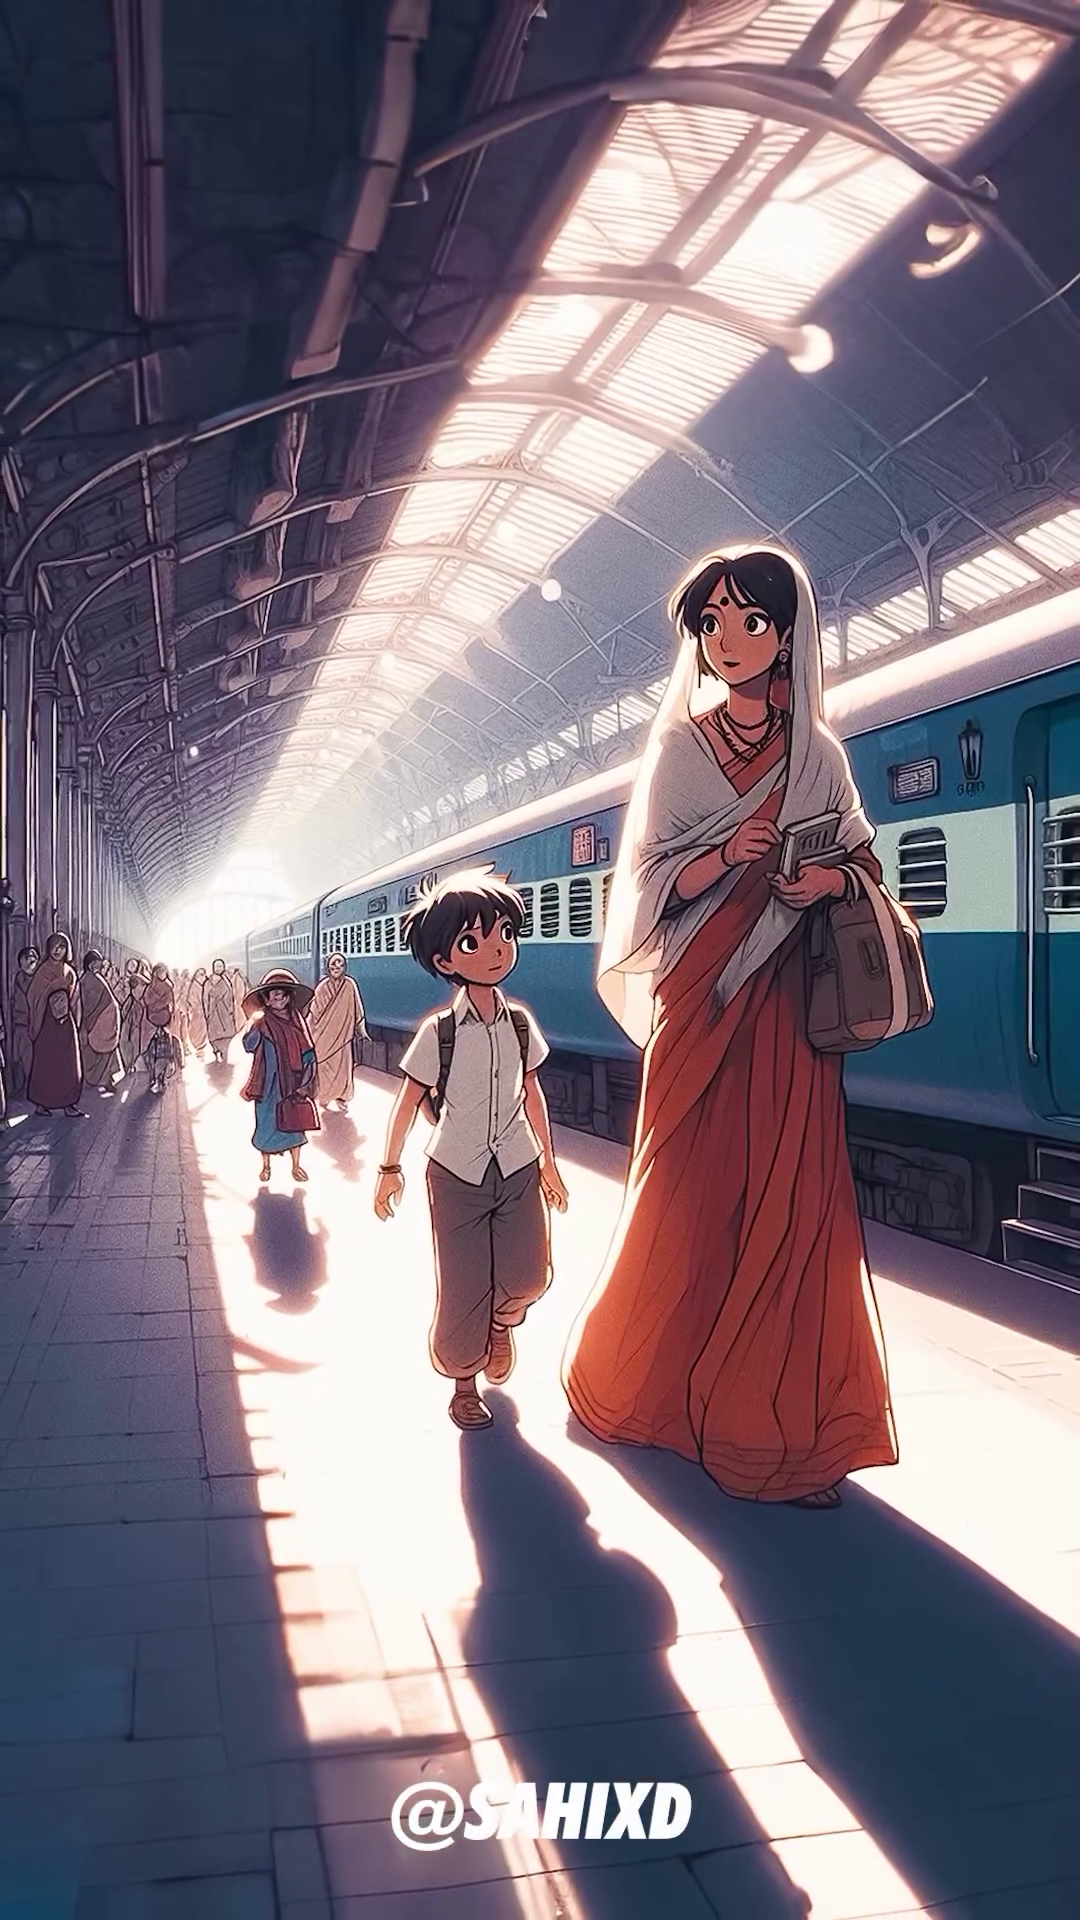 Anime Train Station Wallpaper | 1467x1100 | ID:55284 | Anime scenery,  Scenery, Scenery wallpaper